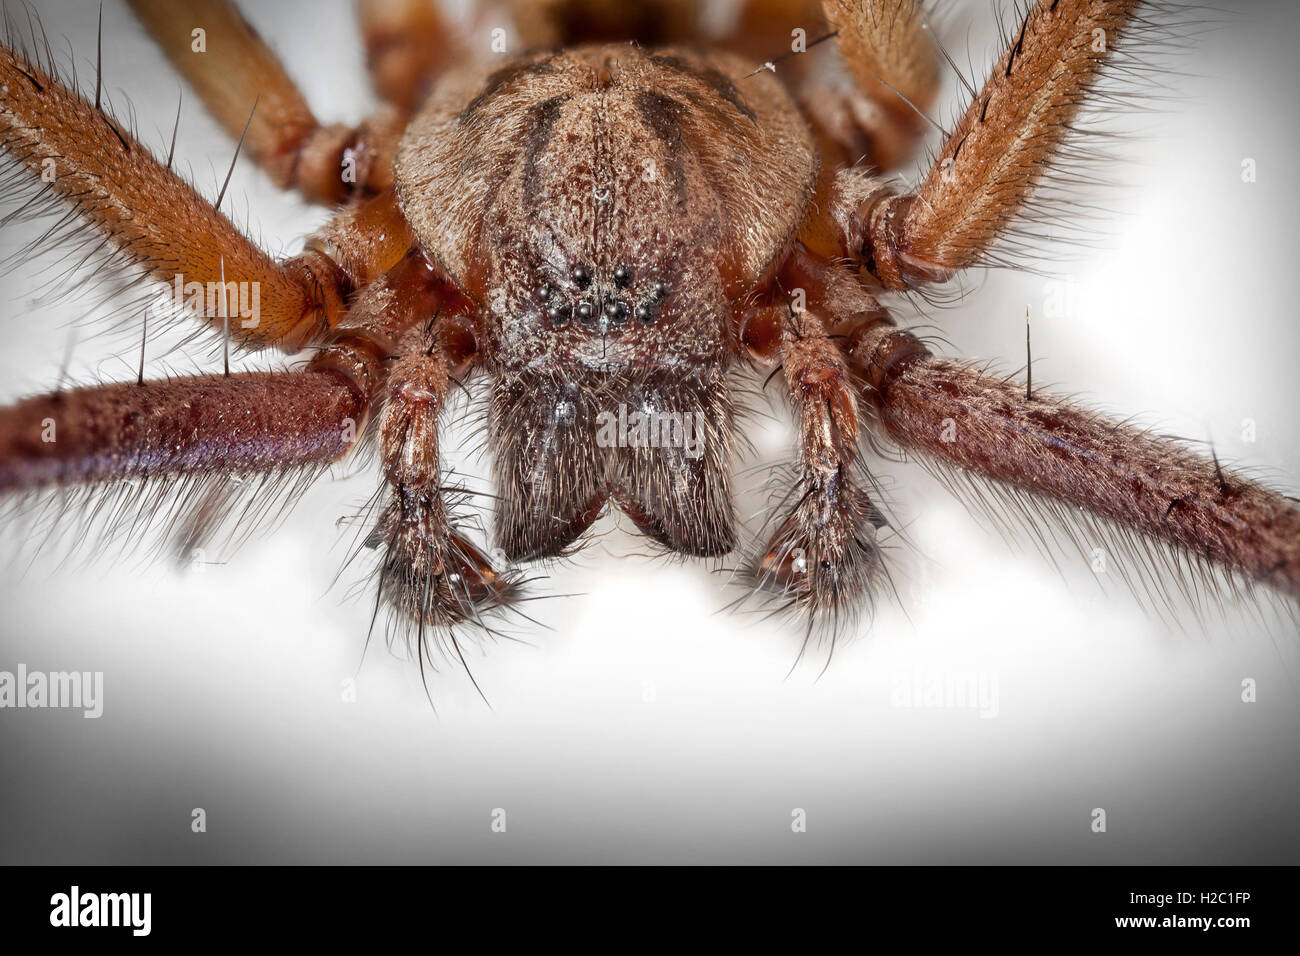 Giant house spider, Eratigena atrica, macro close up showing eye detail Stock Photo